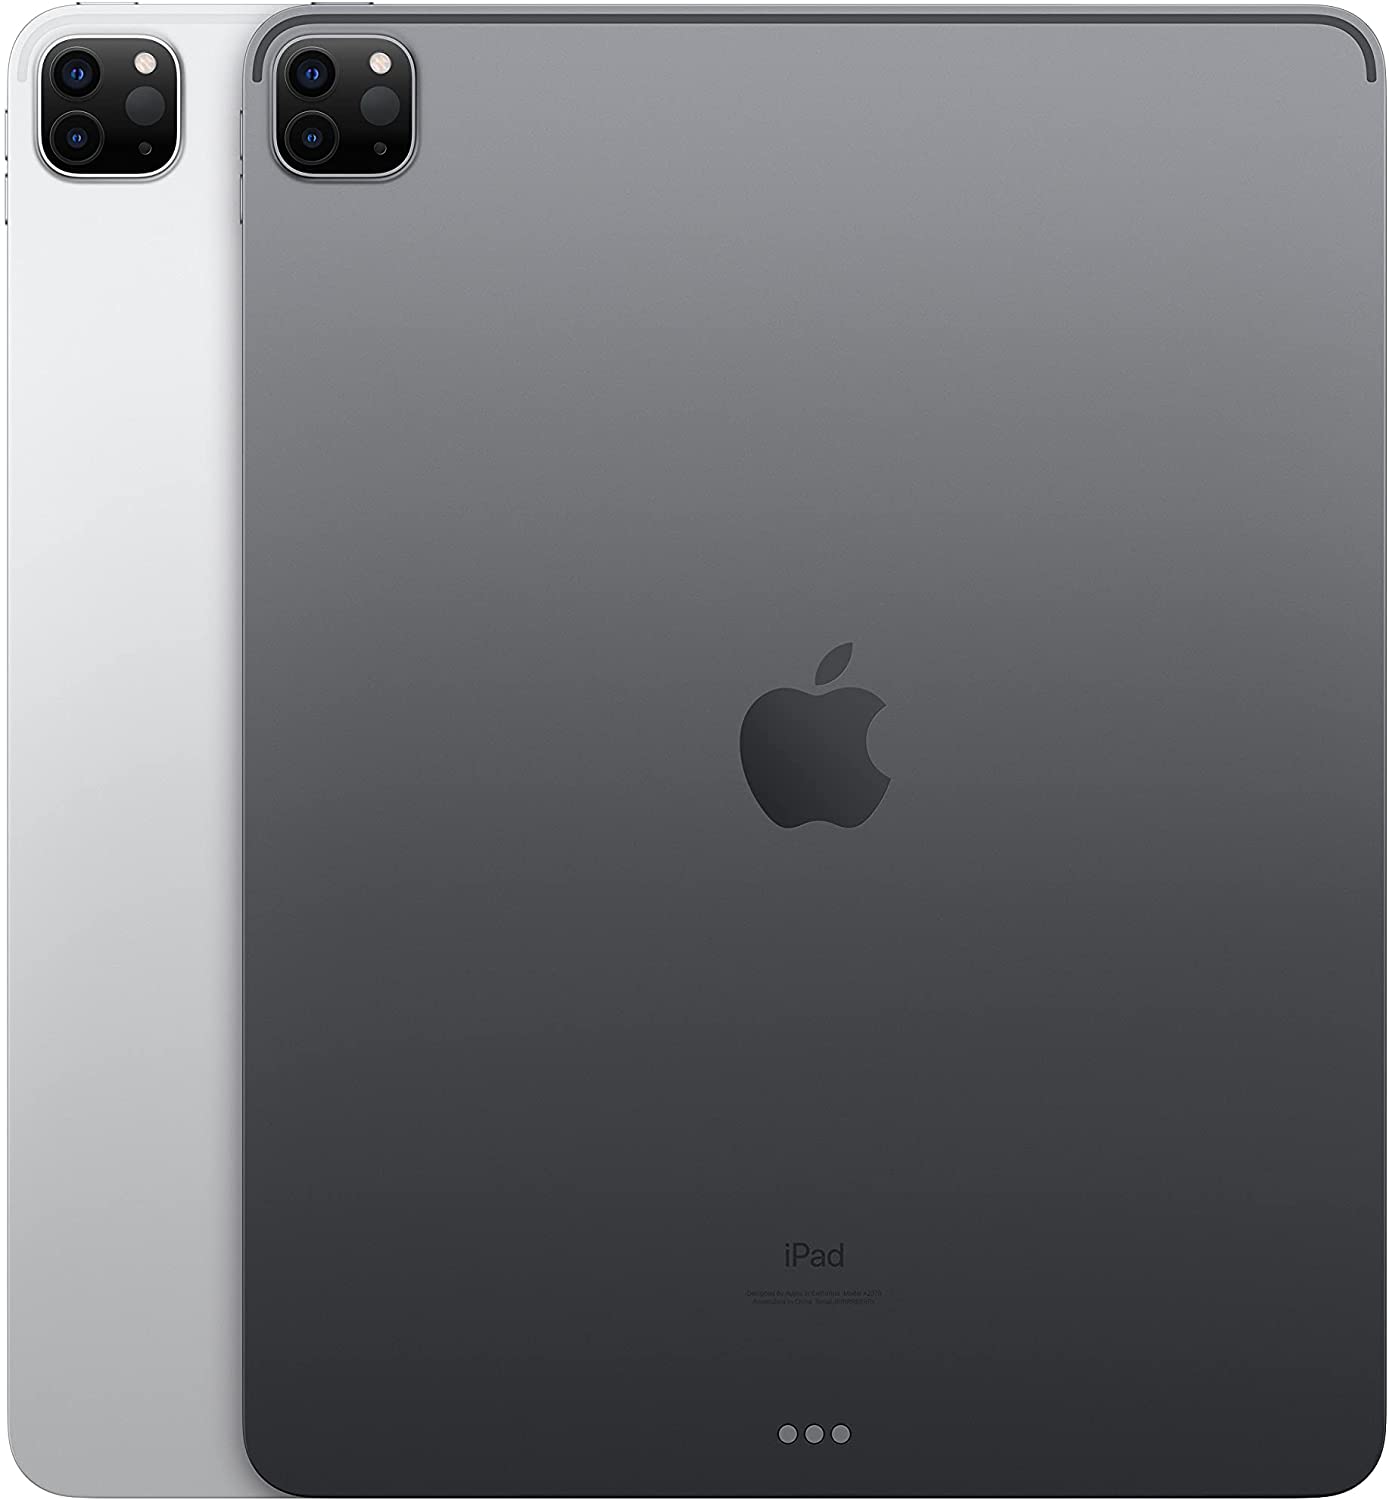 2021 Apple iPad Pro (12.9-inch, Wi-Fi, 128GB) - Space Grey (5th Generation)